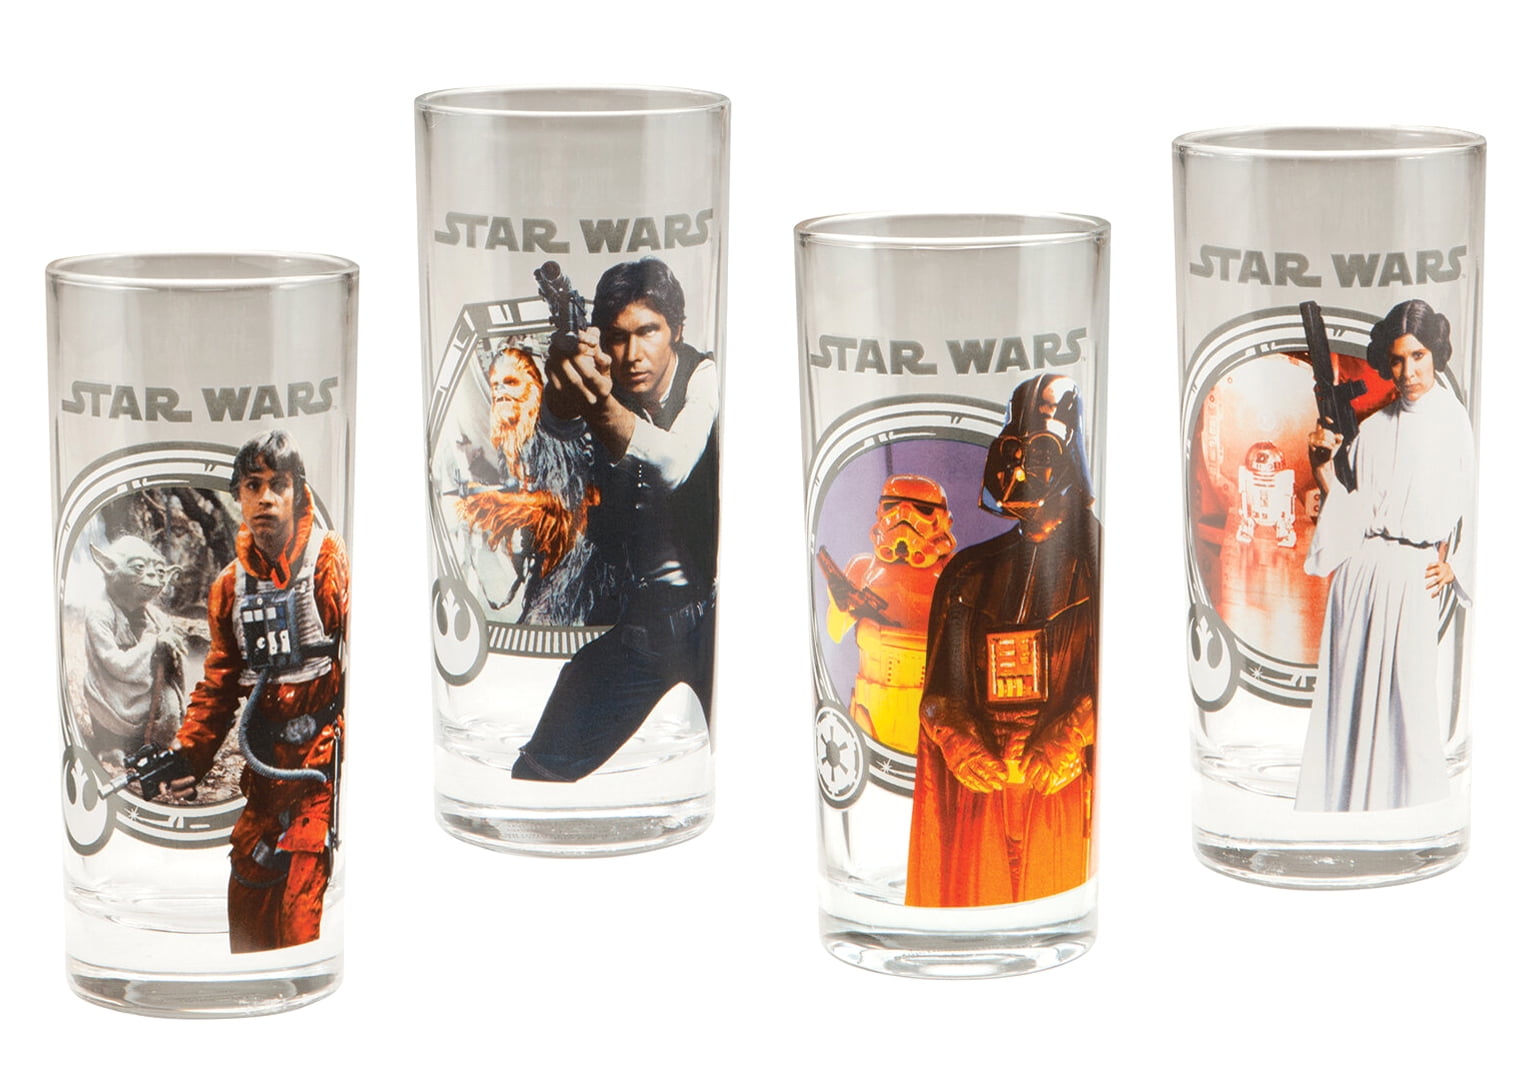 Star Wars Original Trilogy Characters 4-Piece Shot Glass Set